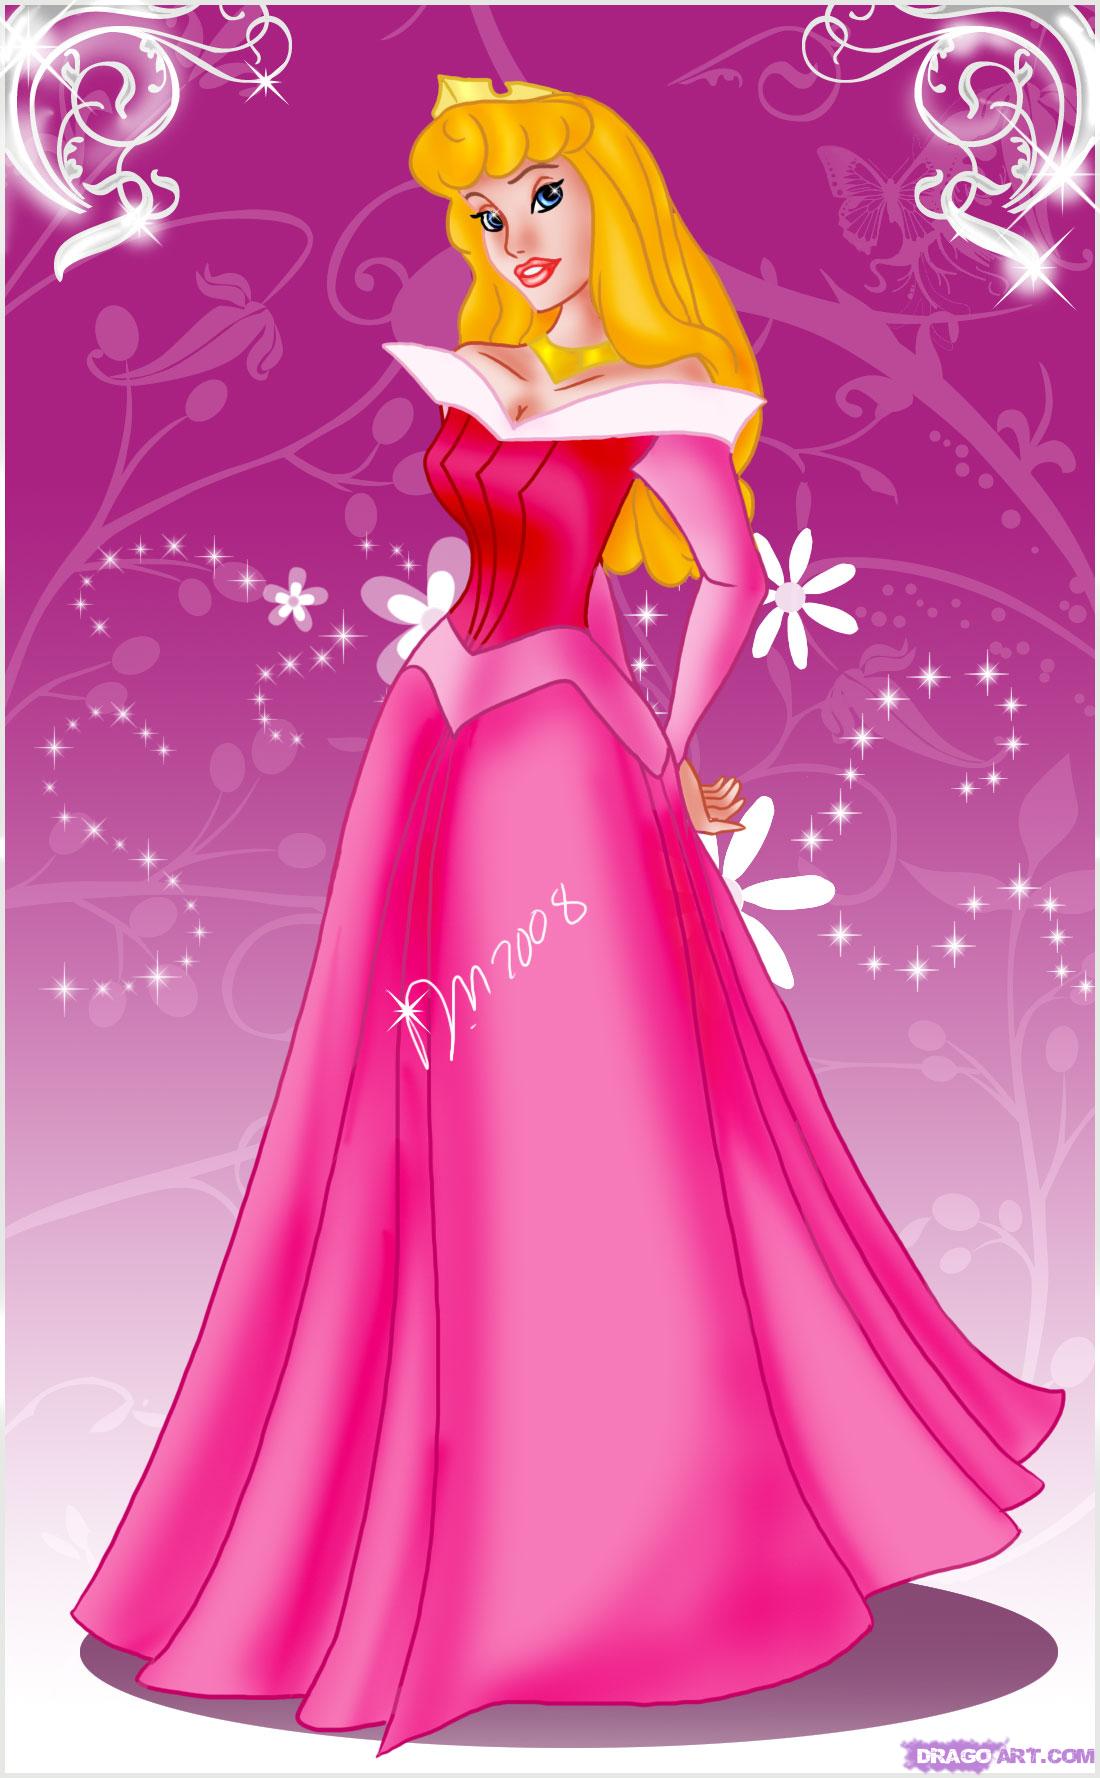 Sleeping Beauty Walt Disney Cartoon Wallpaper Image for iPhone